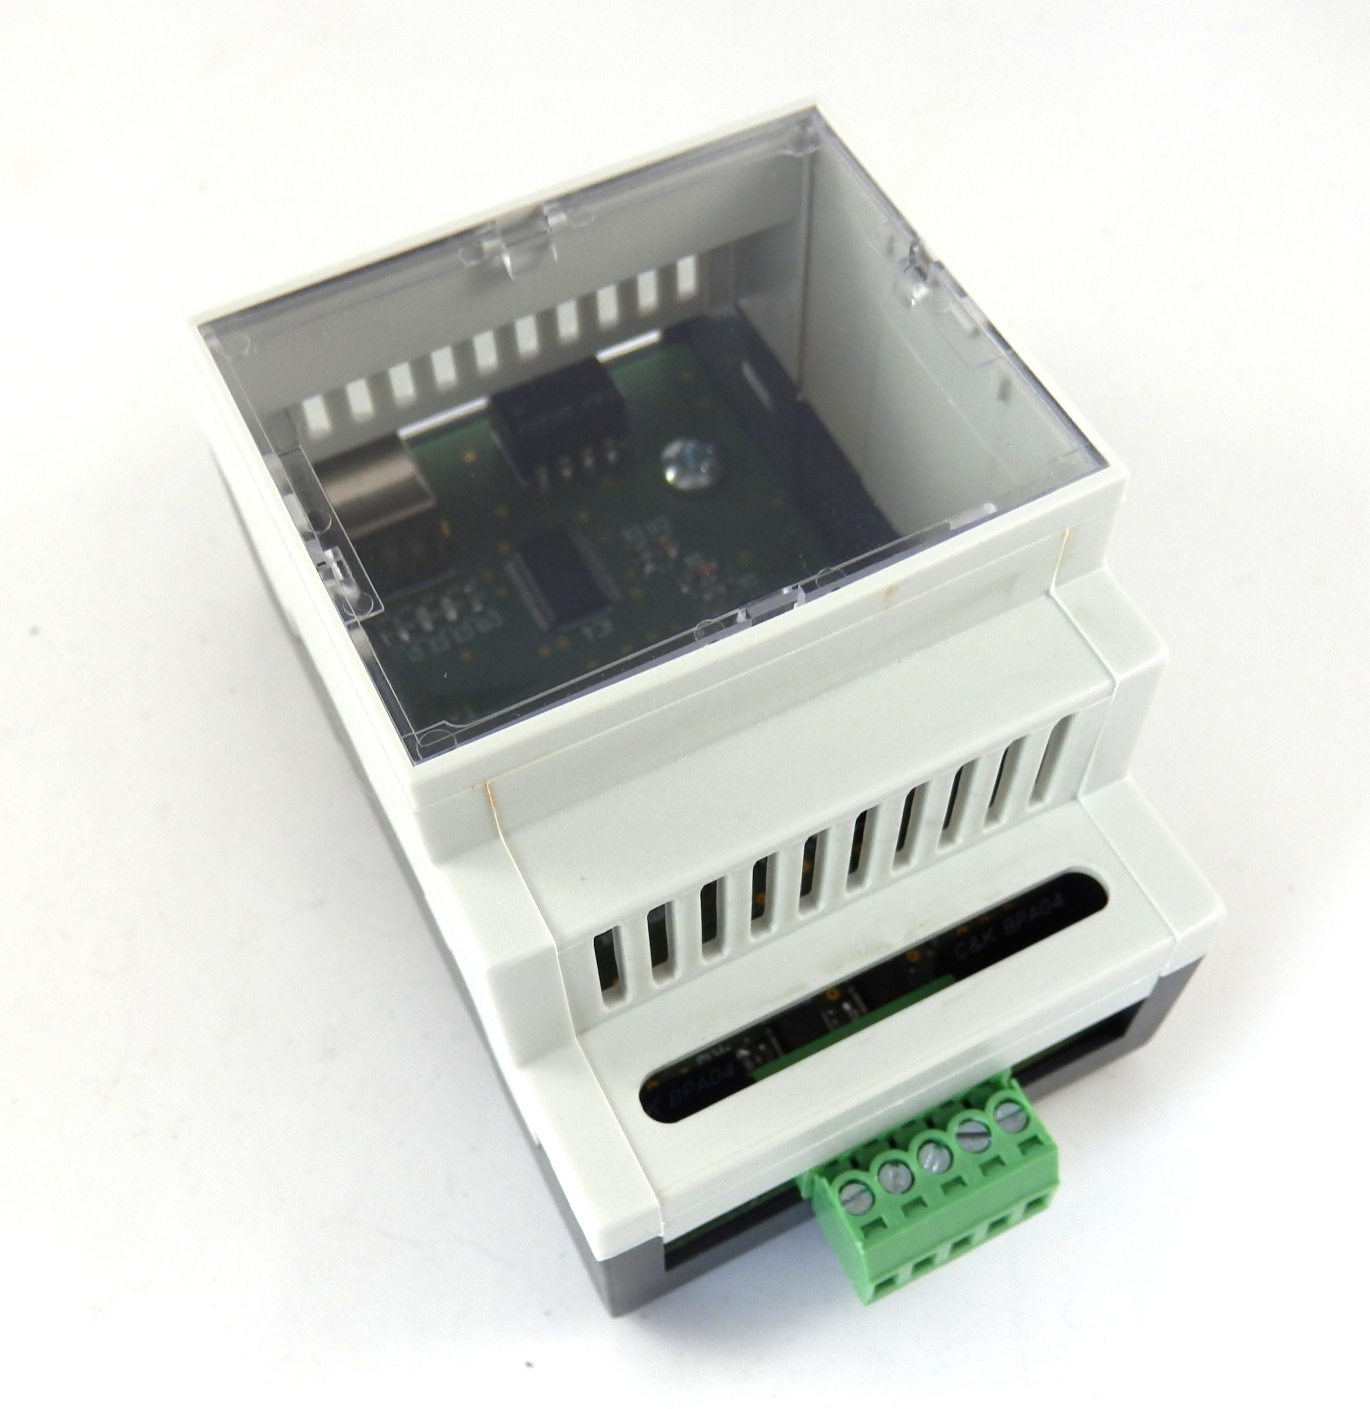 SimpliBox 485  - assembled device